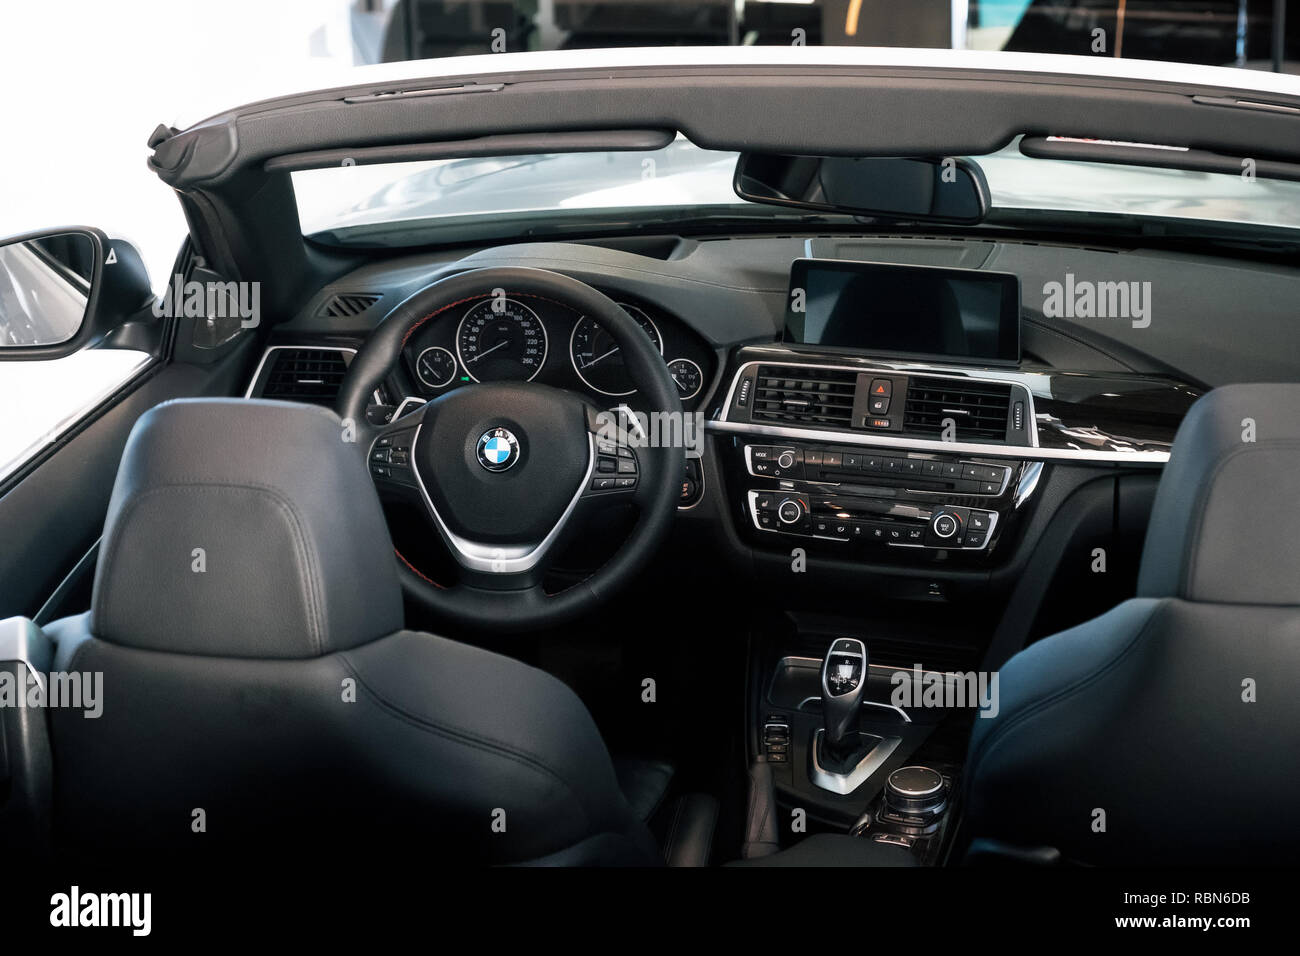 Munich, Germany - December 7, 2017: Interior of BMW 430 cabriolet sports  car Stock Photo - Alamy